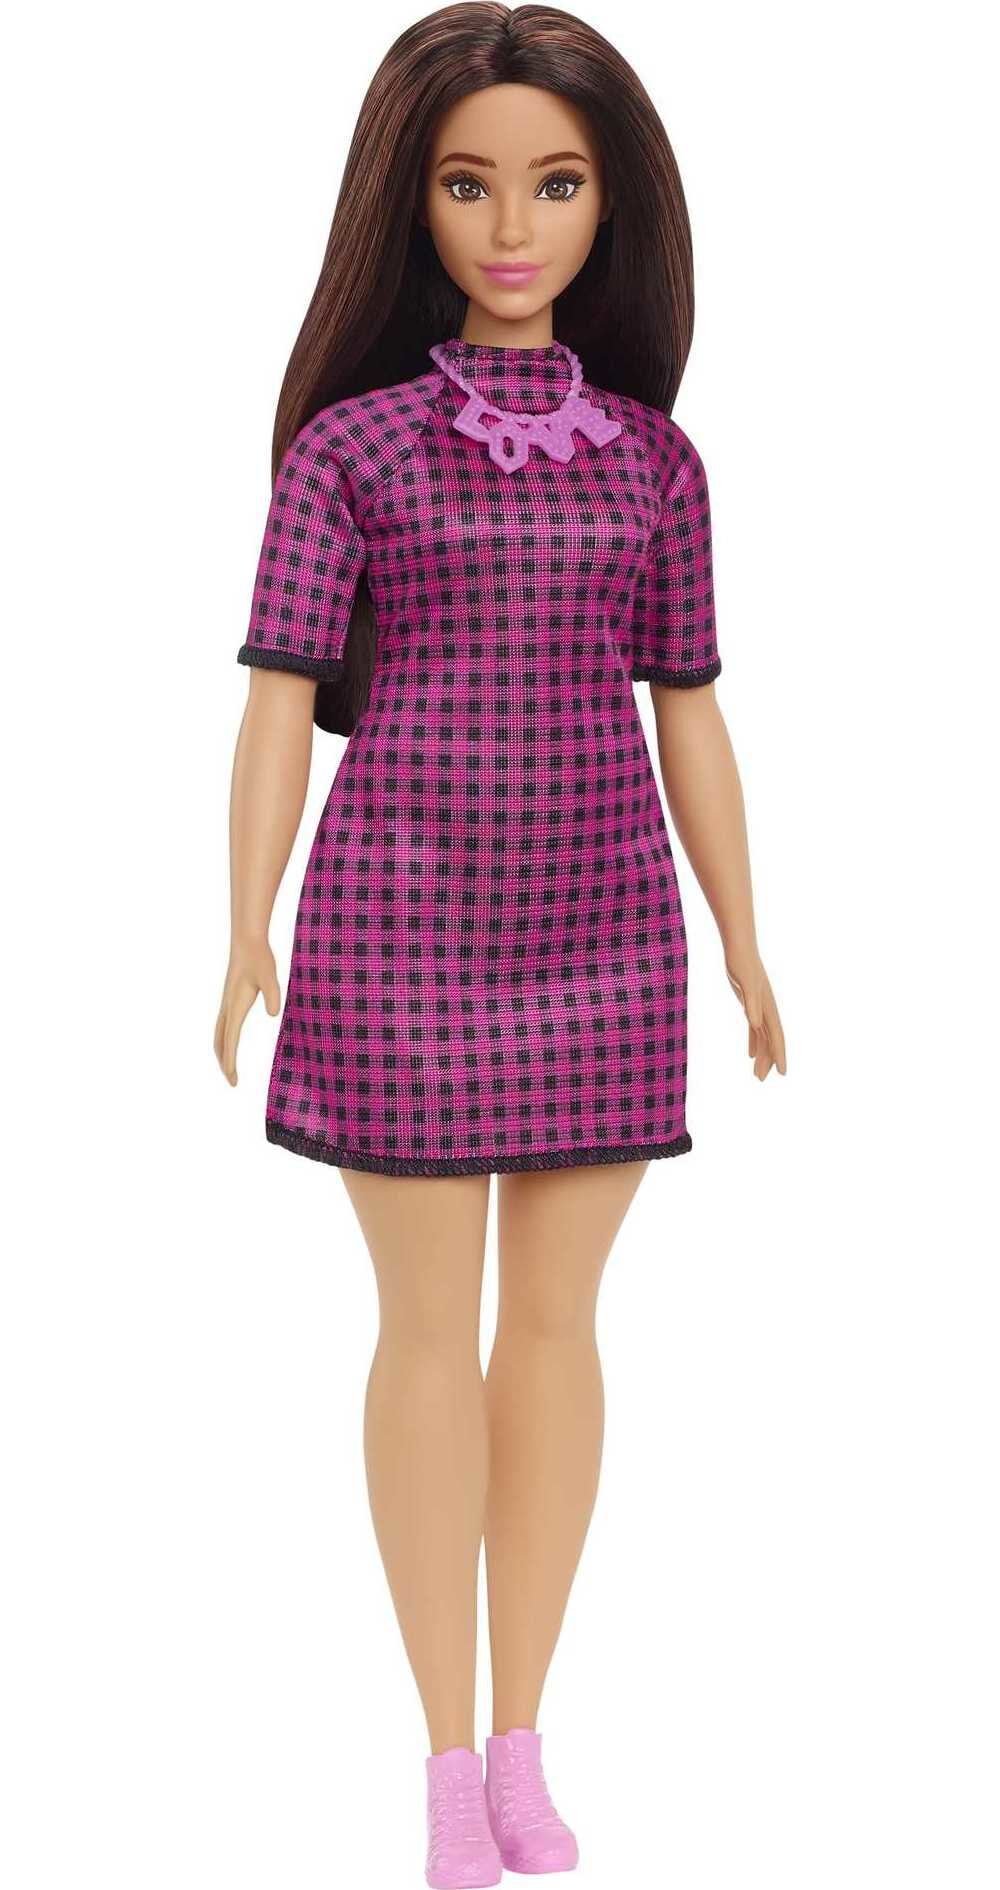 Barbie Complete Fashion Fashionista Skirt Sets lot of 6 New Curvy Tall Petite 